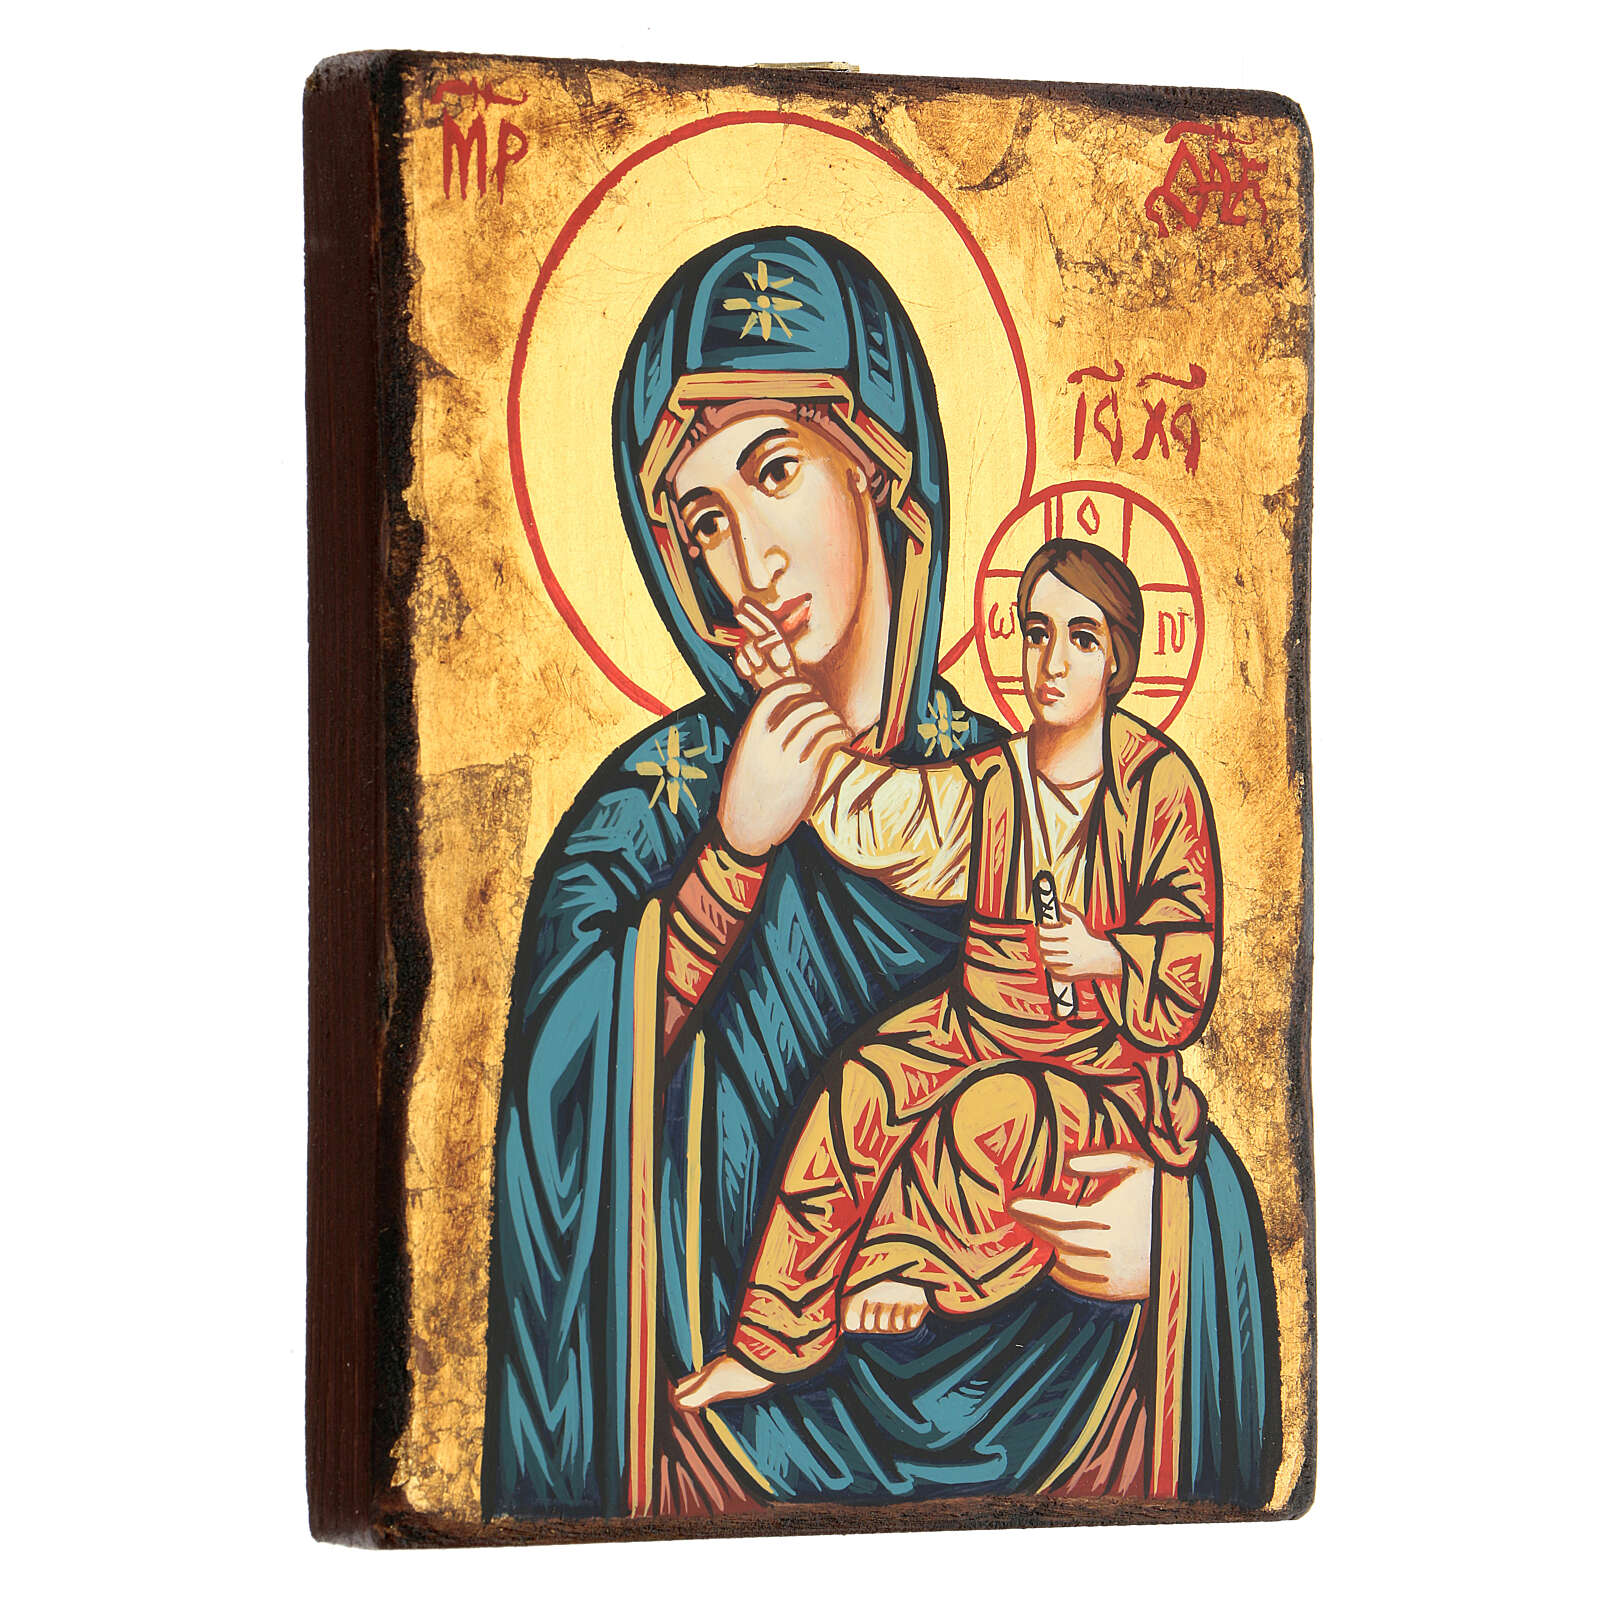 Icona Madre di Dio Paramithia